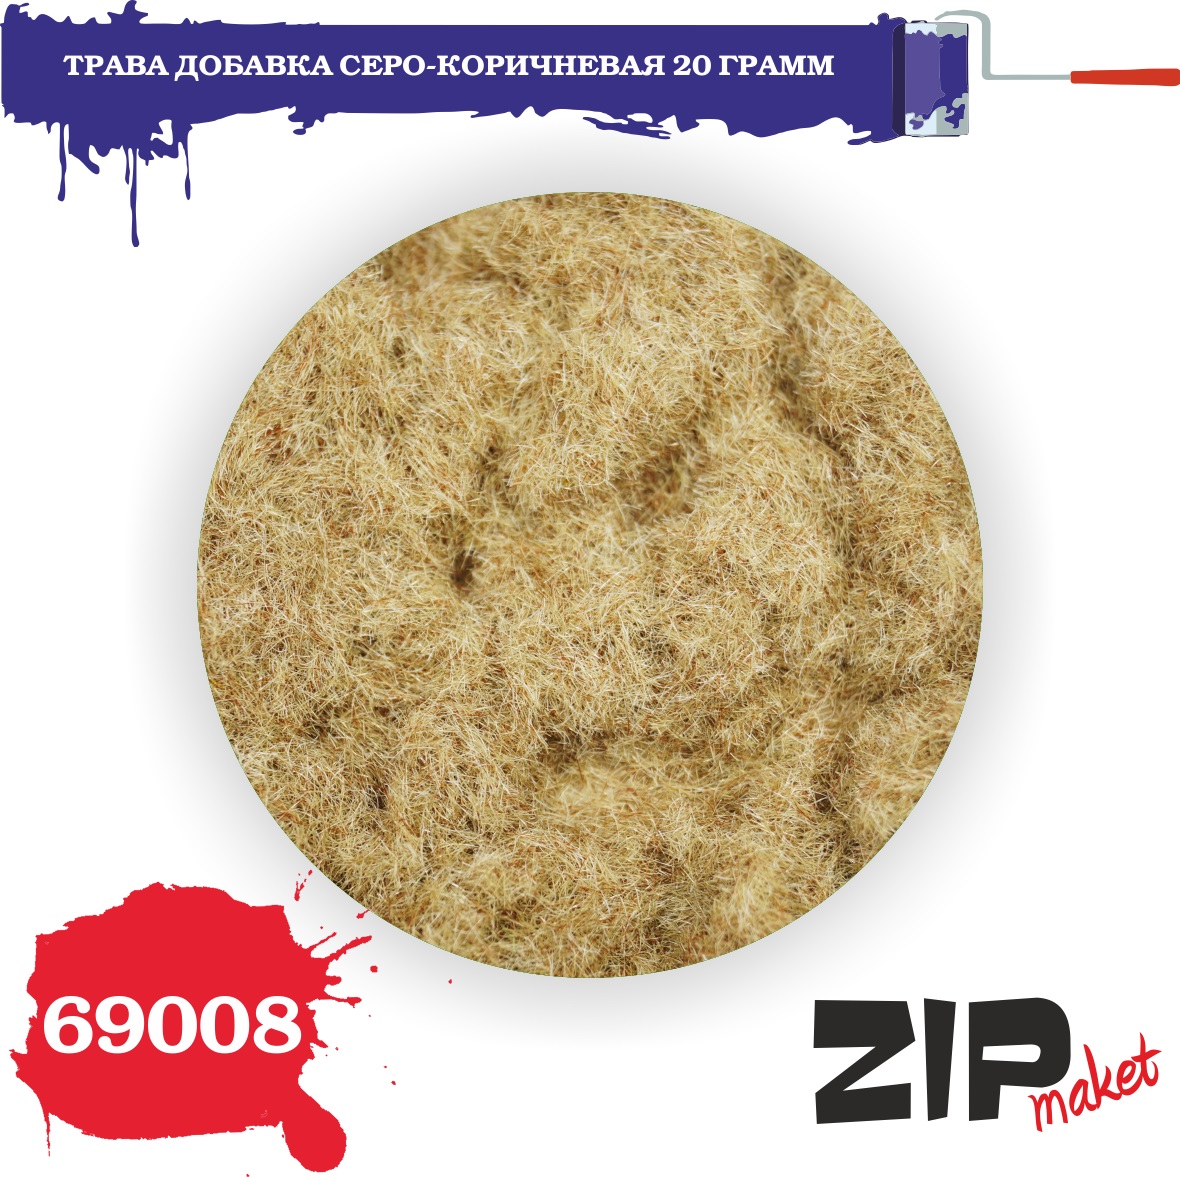 69008  материалы для диорам  Трава добавка серо-коричневая, 20гр